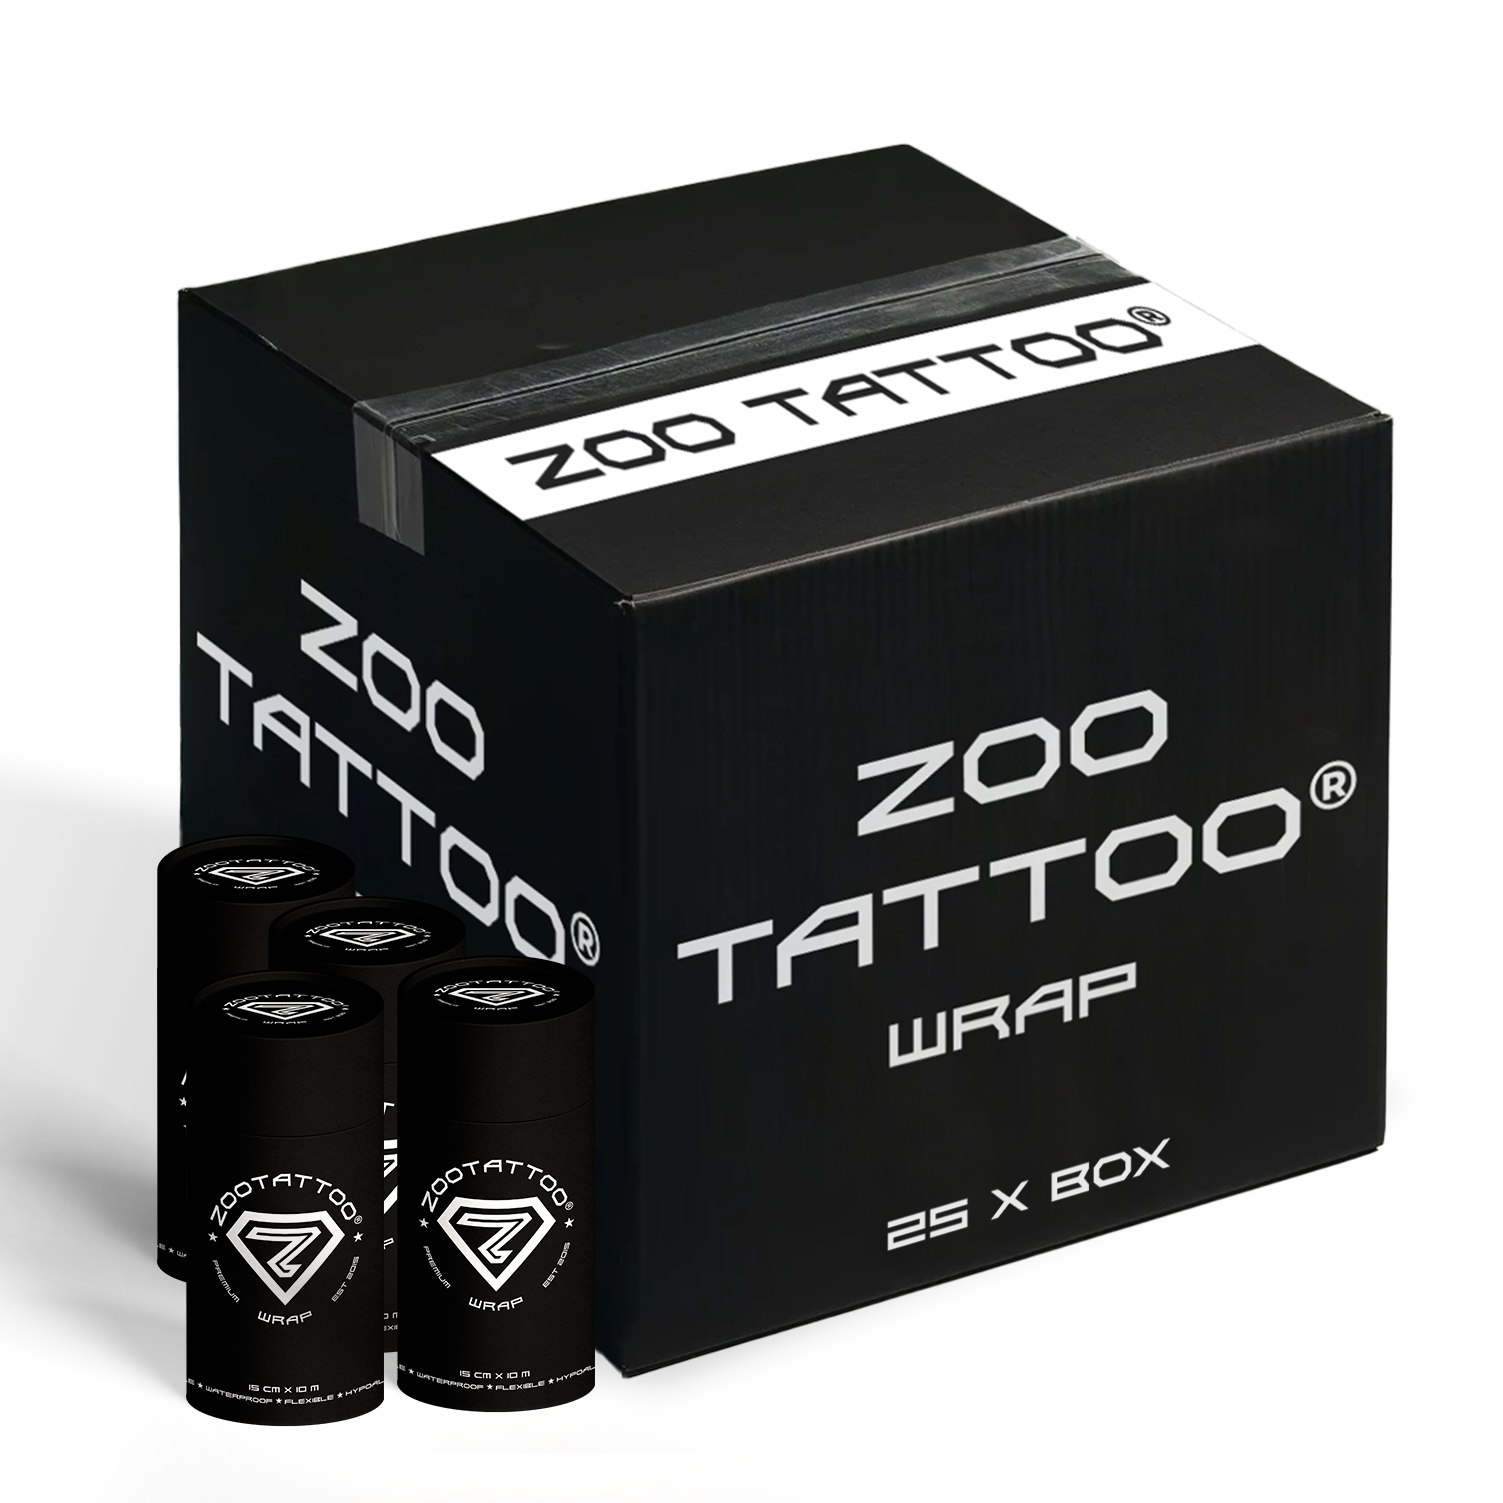 ZOOTATTOO WRAP adhesive tattoo bandage box of 50 with free worldwide shipping